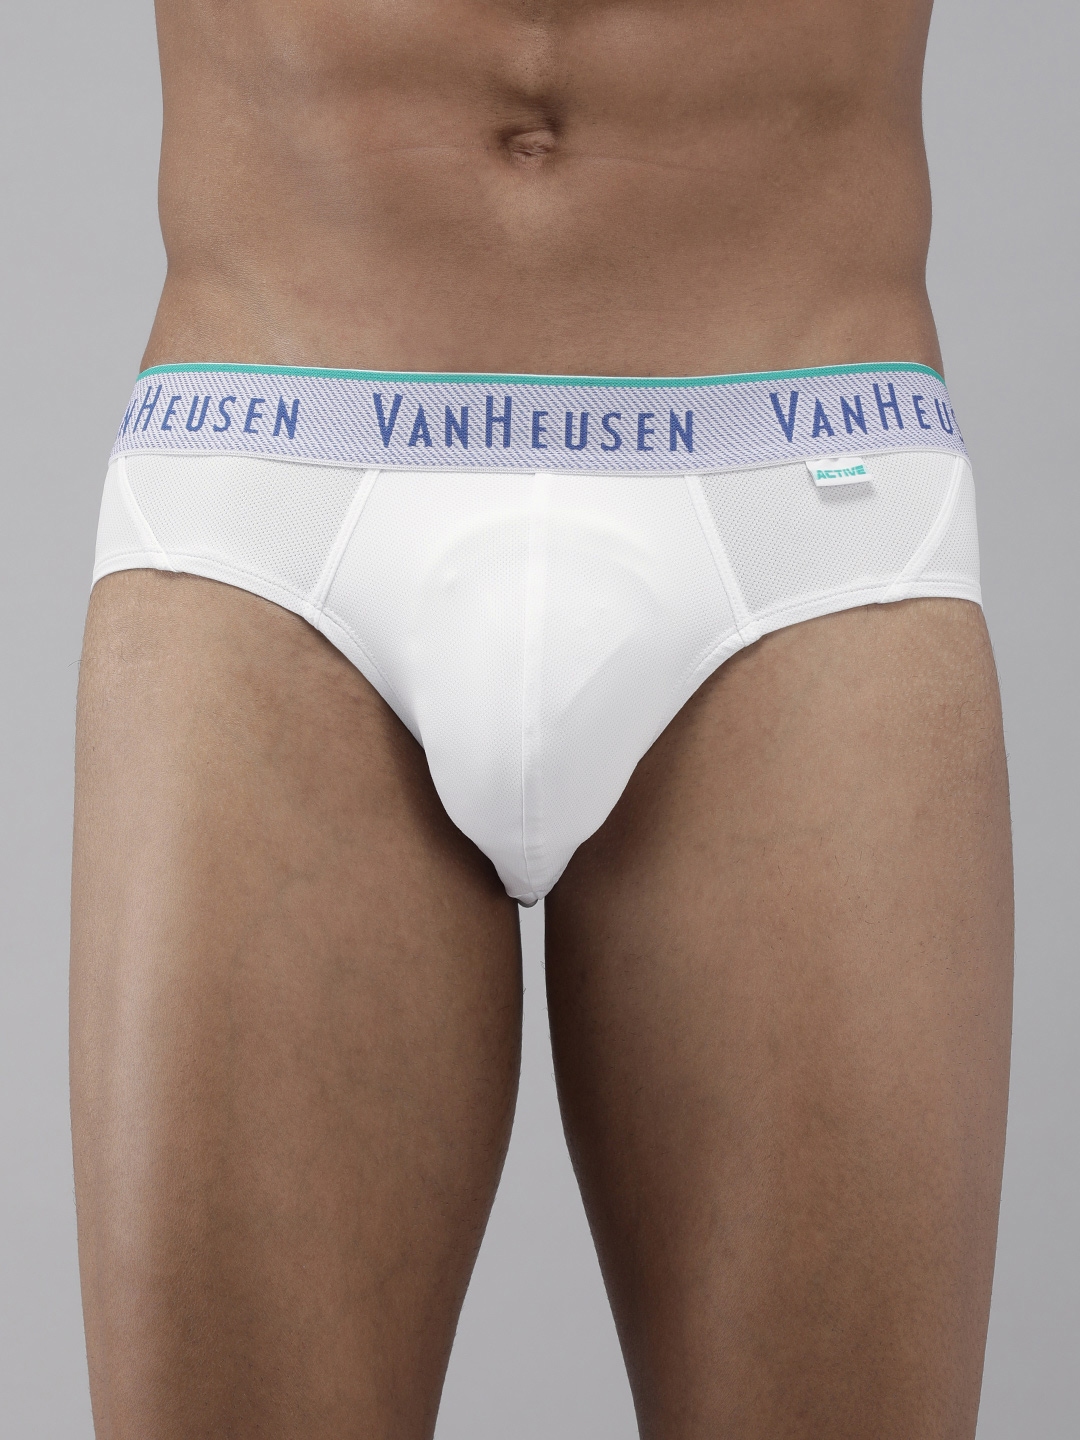 Van Heusen Innerwear Briefs, Men AIR Colour Fresh Briefs - Mesh